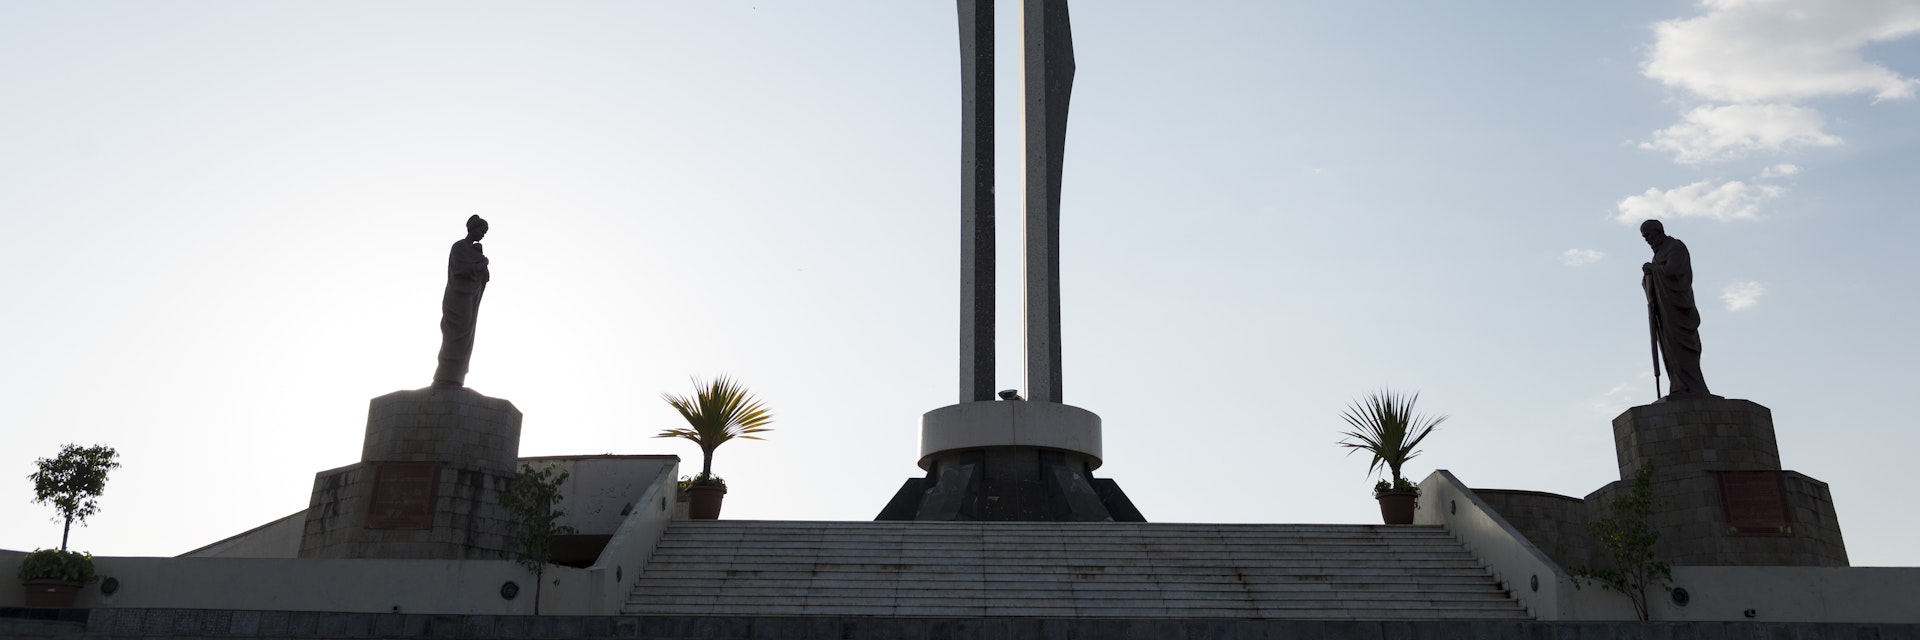 Amhara People Martyrs Memorial Monument